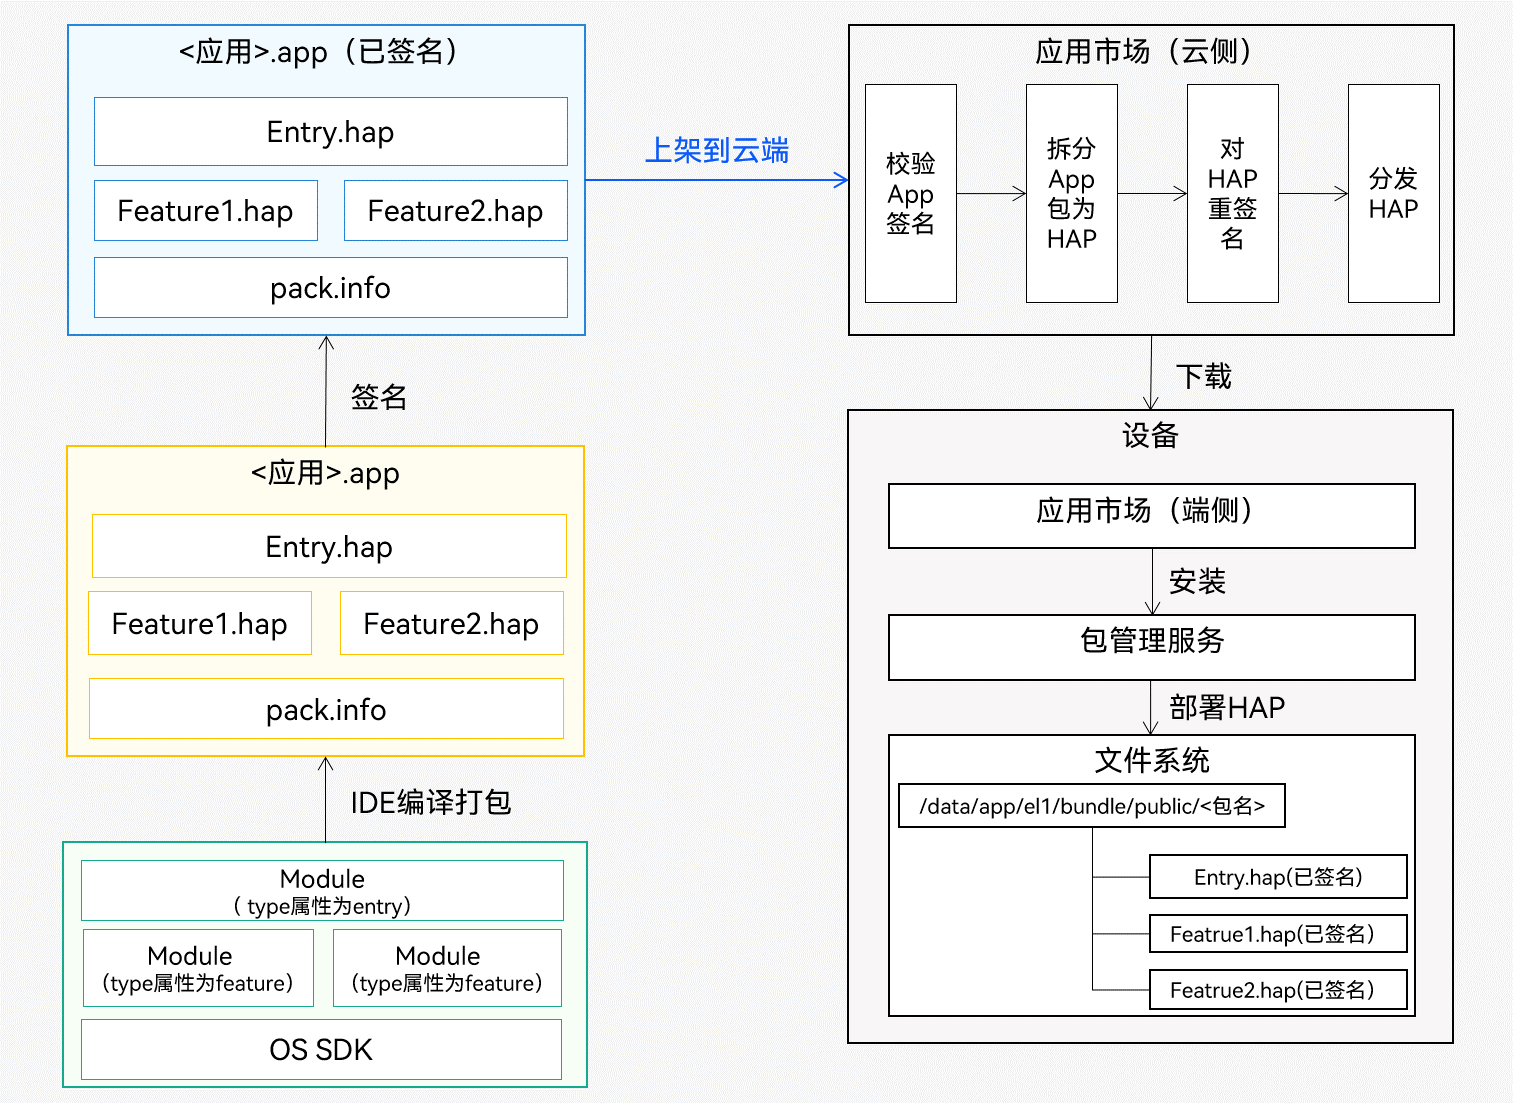 zh-cn/application-dev/quick-start/figures/hap-release.png